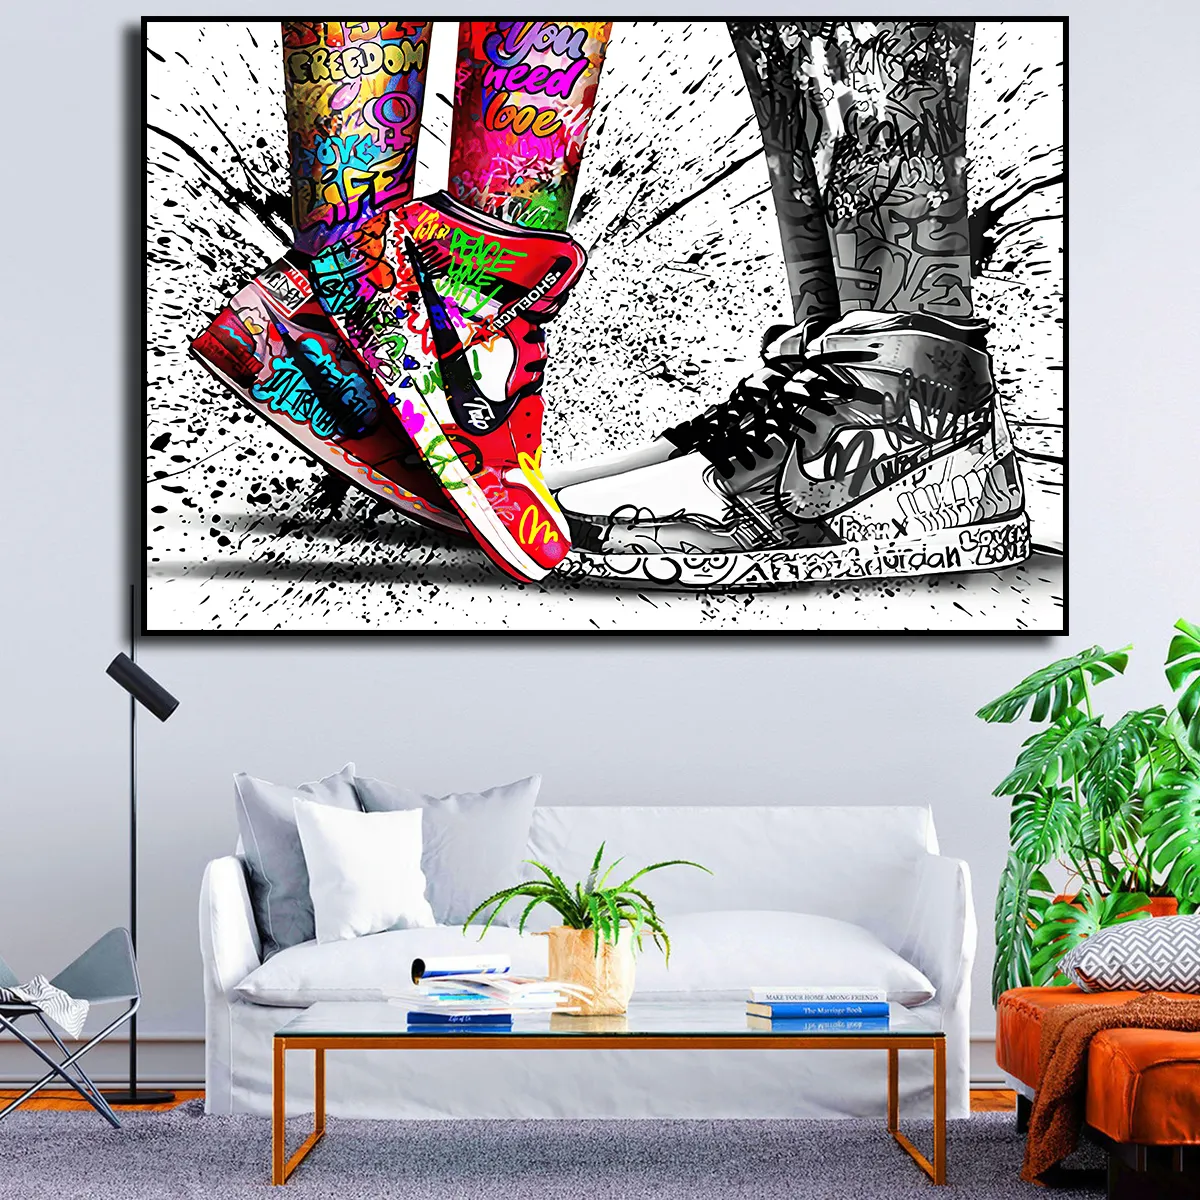 Graffiti Air Jordan Print Canvas Painting Decor Picture for Office Nike Shoes Air Jordan Canvas Poster Living Room Home Decor